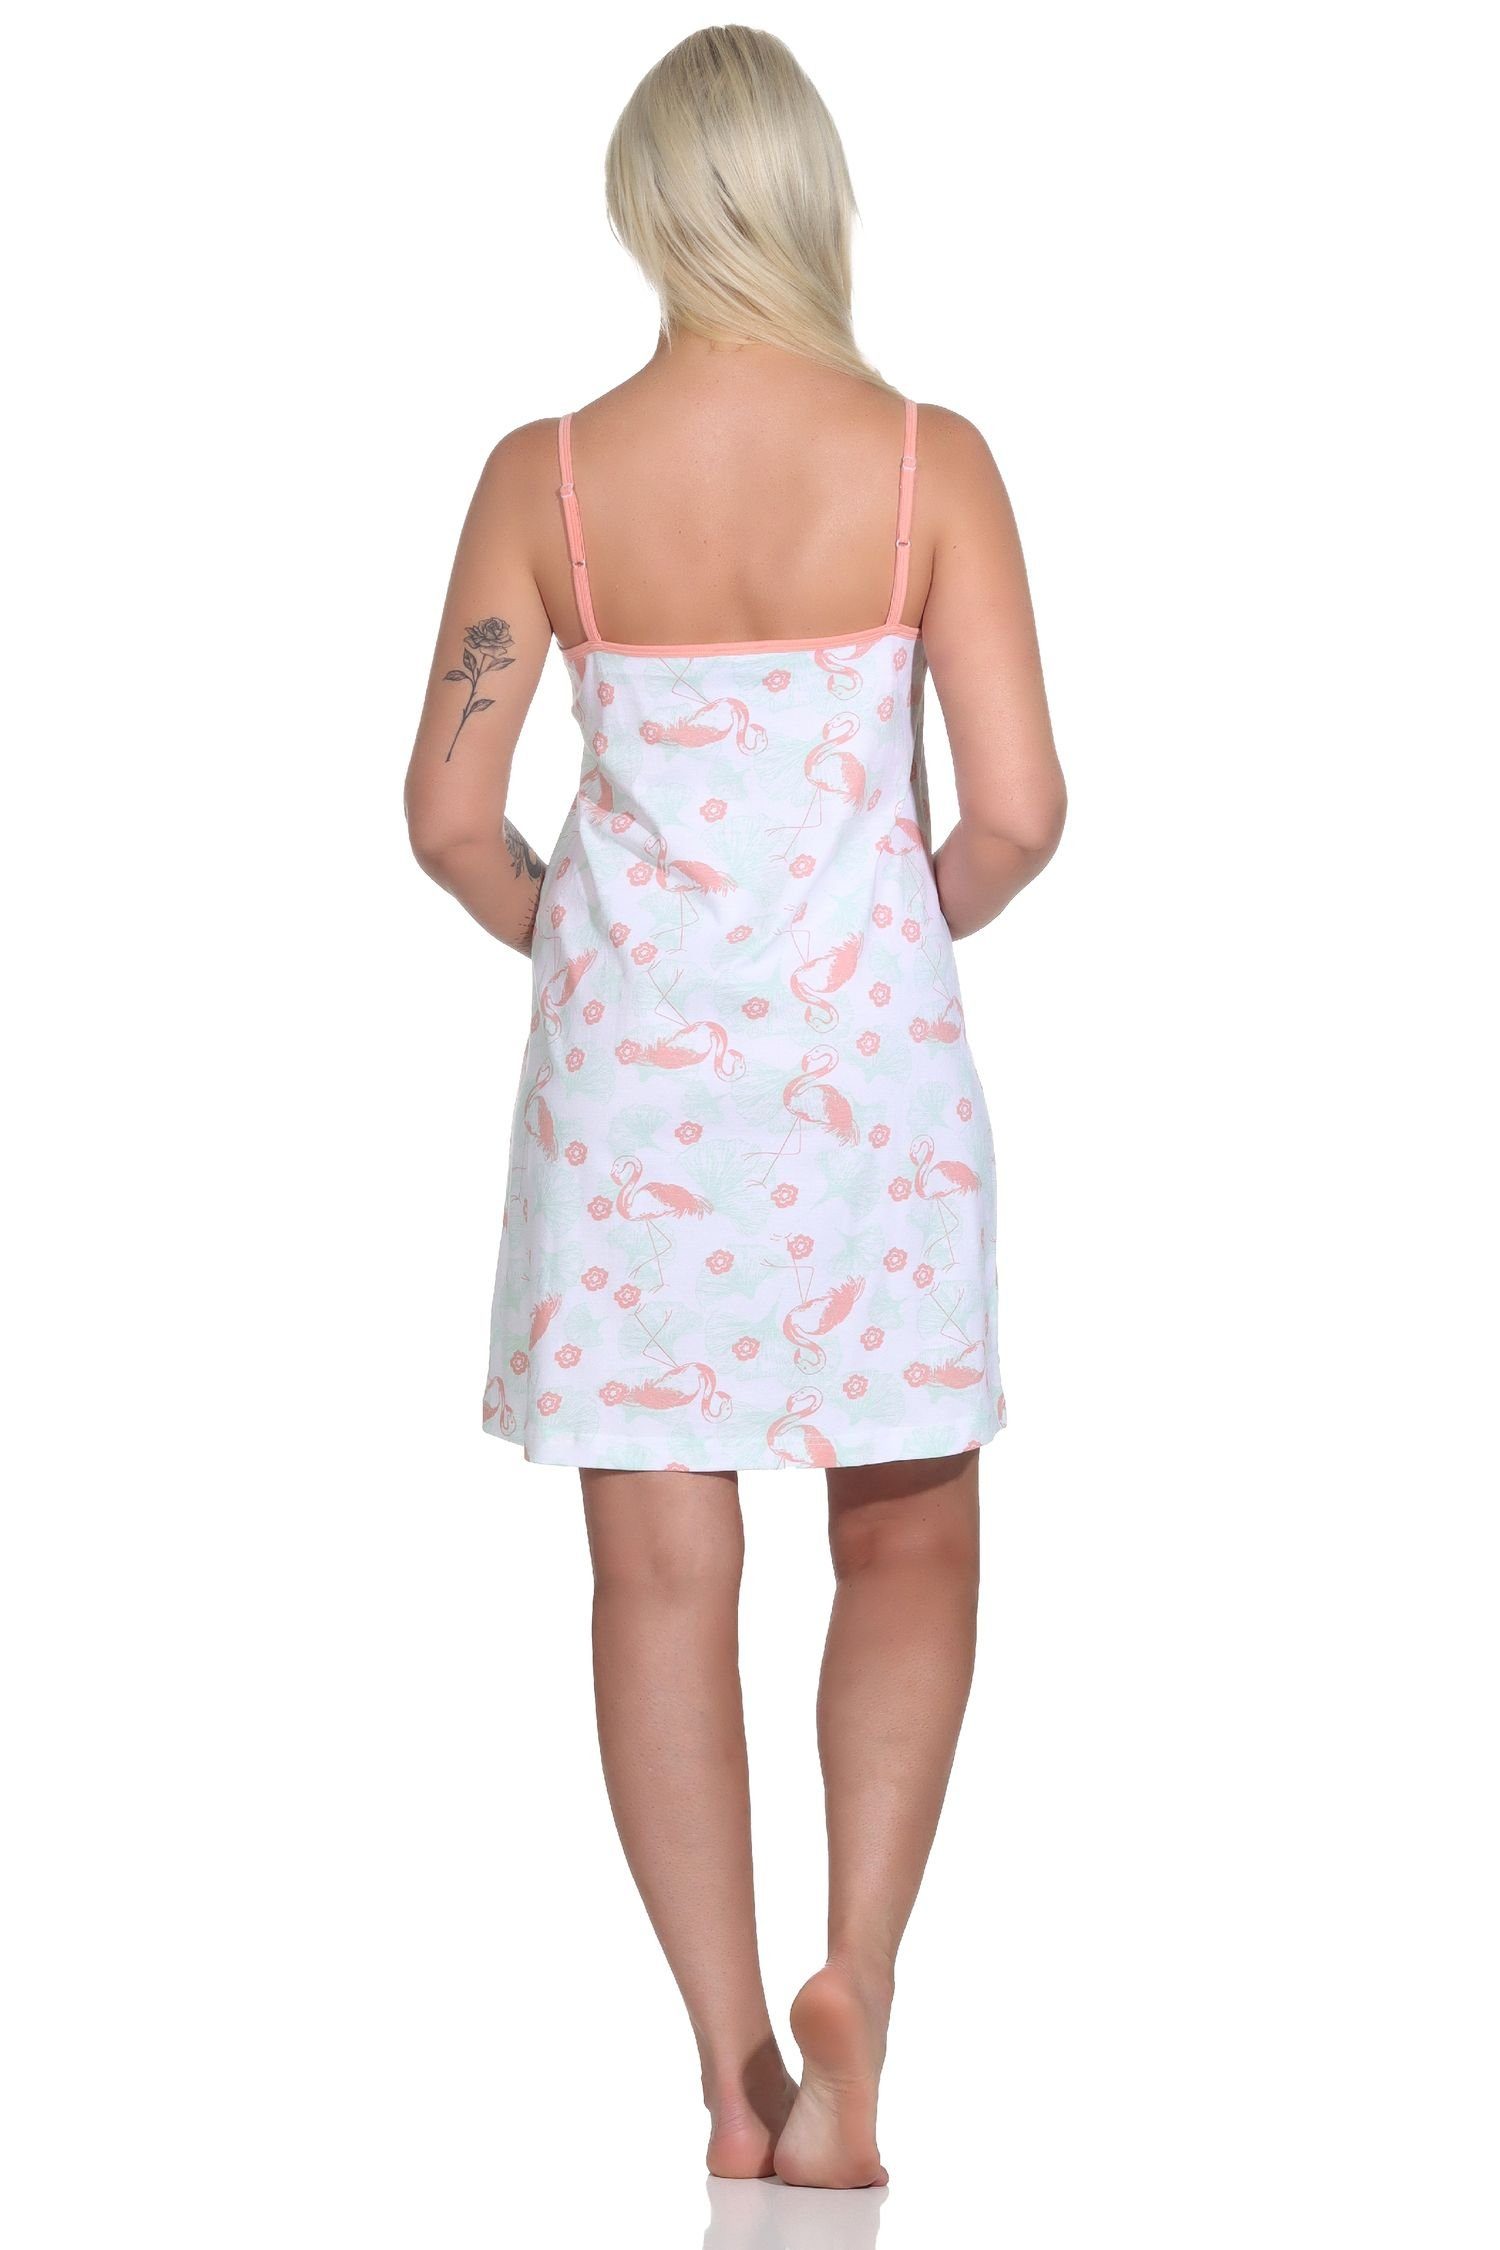 Motiv Nachthemd mit Normann Damen apricot Nachthemd Flamingo Spaghetti-Träger